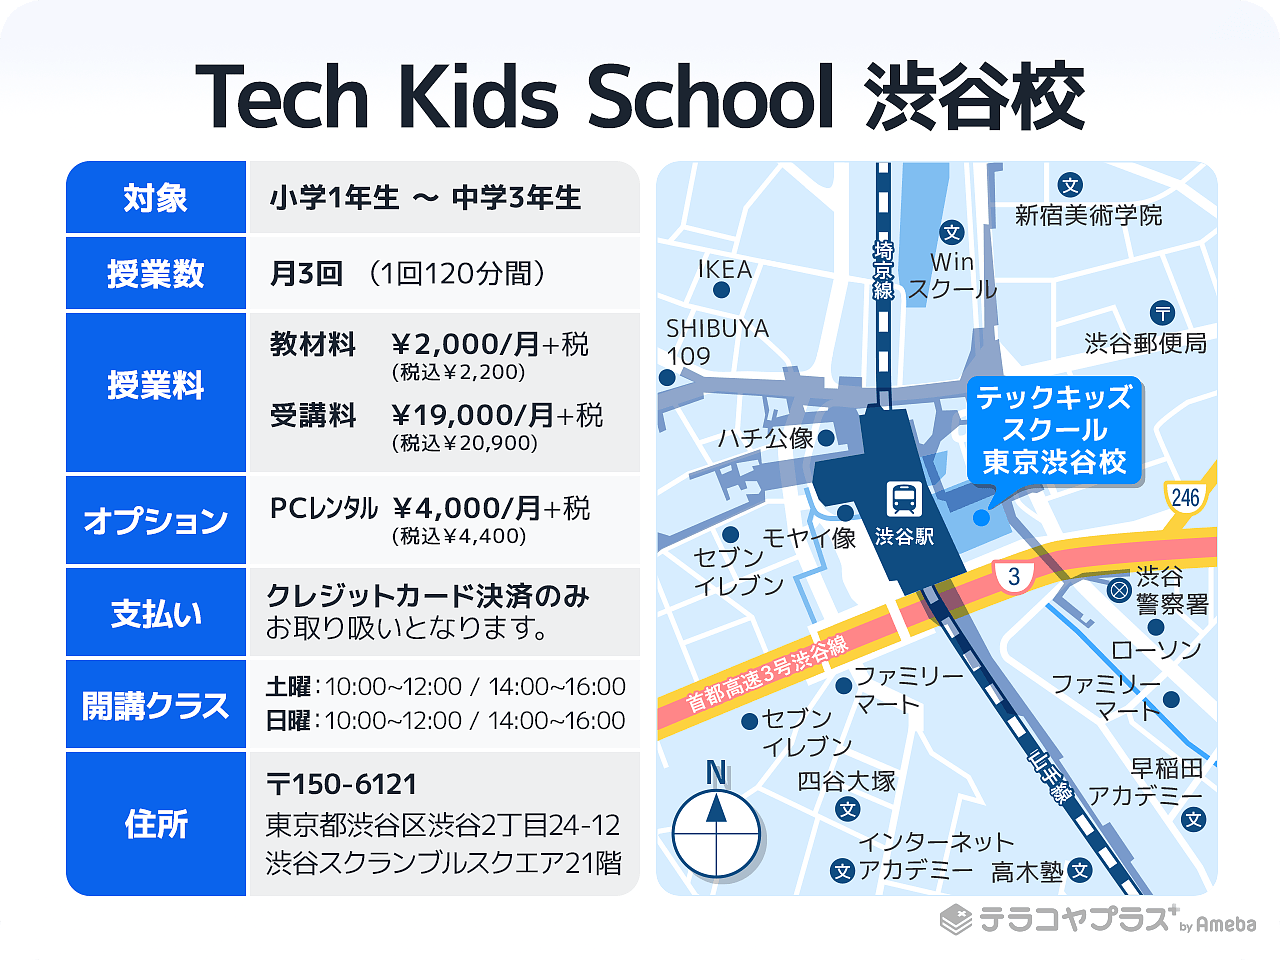 「Tech Kids School」渋谷校の料金とアクセス